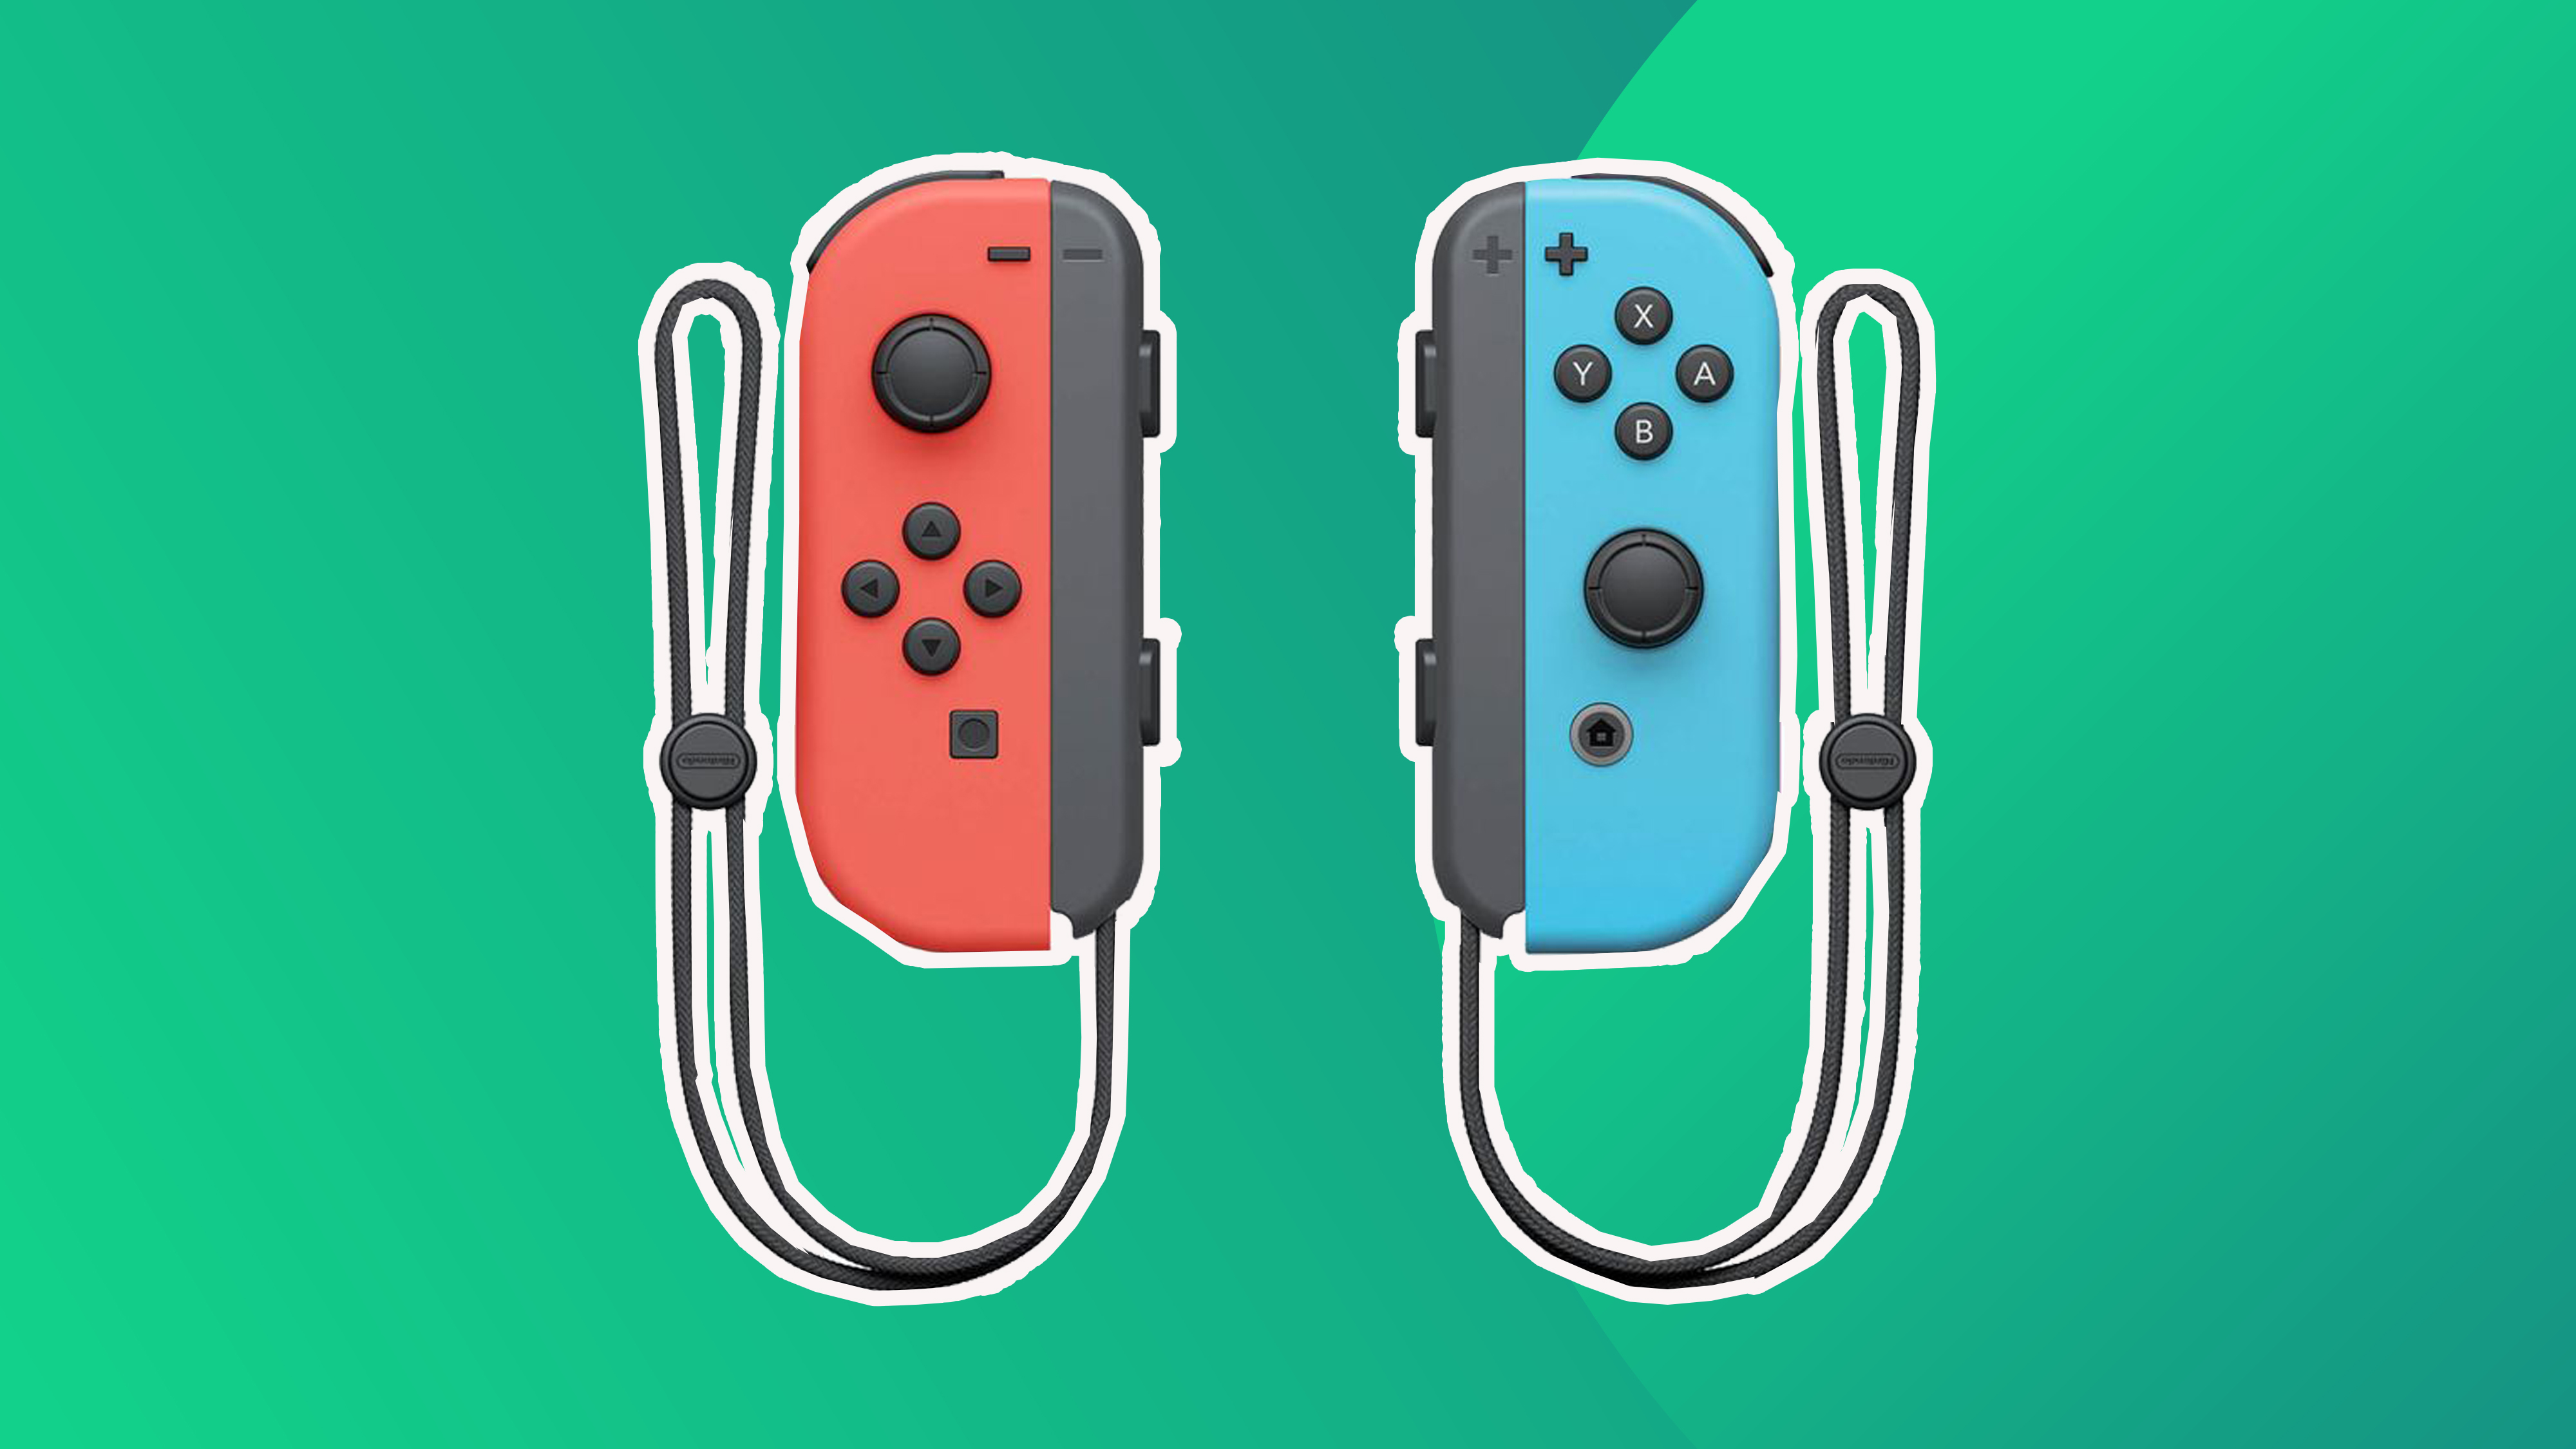 Best Nintendo Switch Joy-Con Alternative